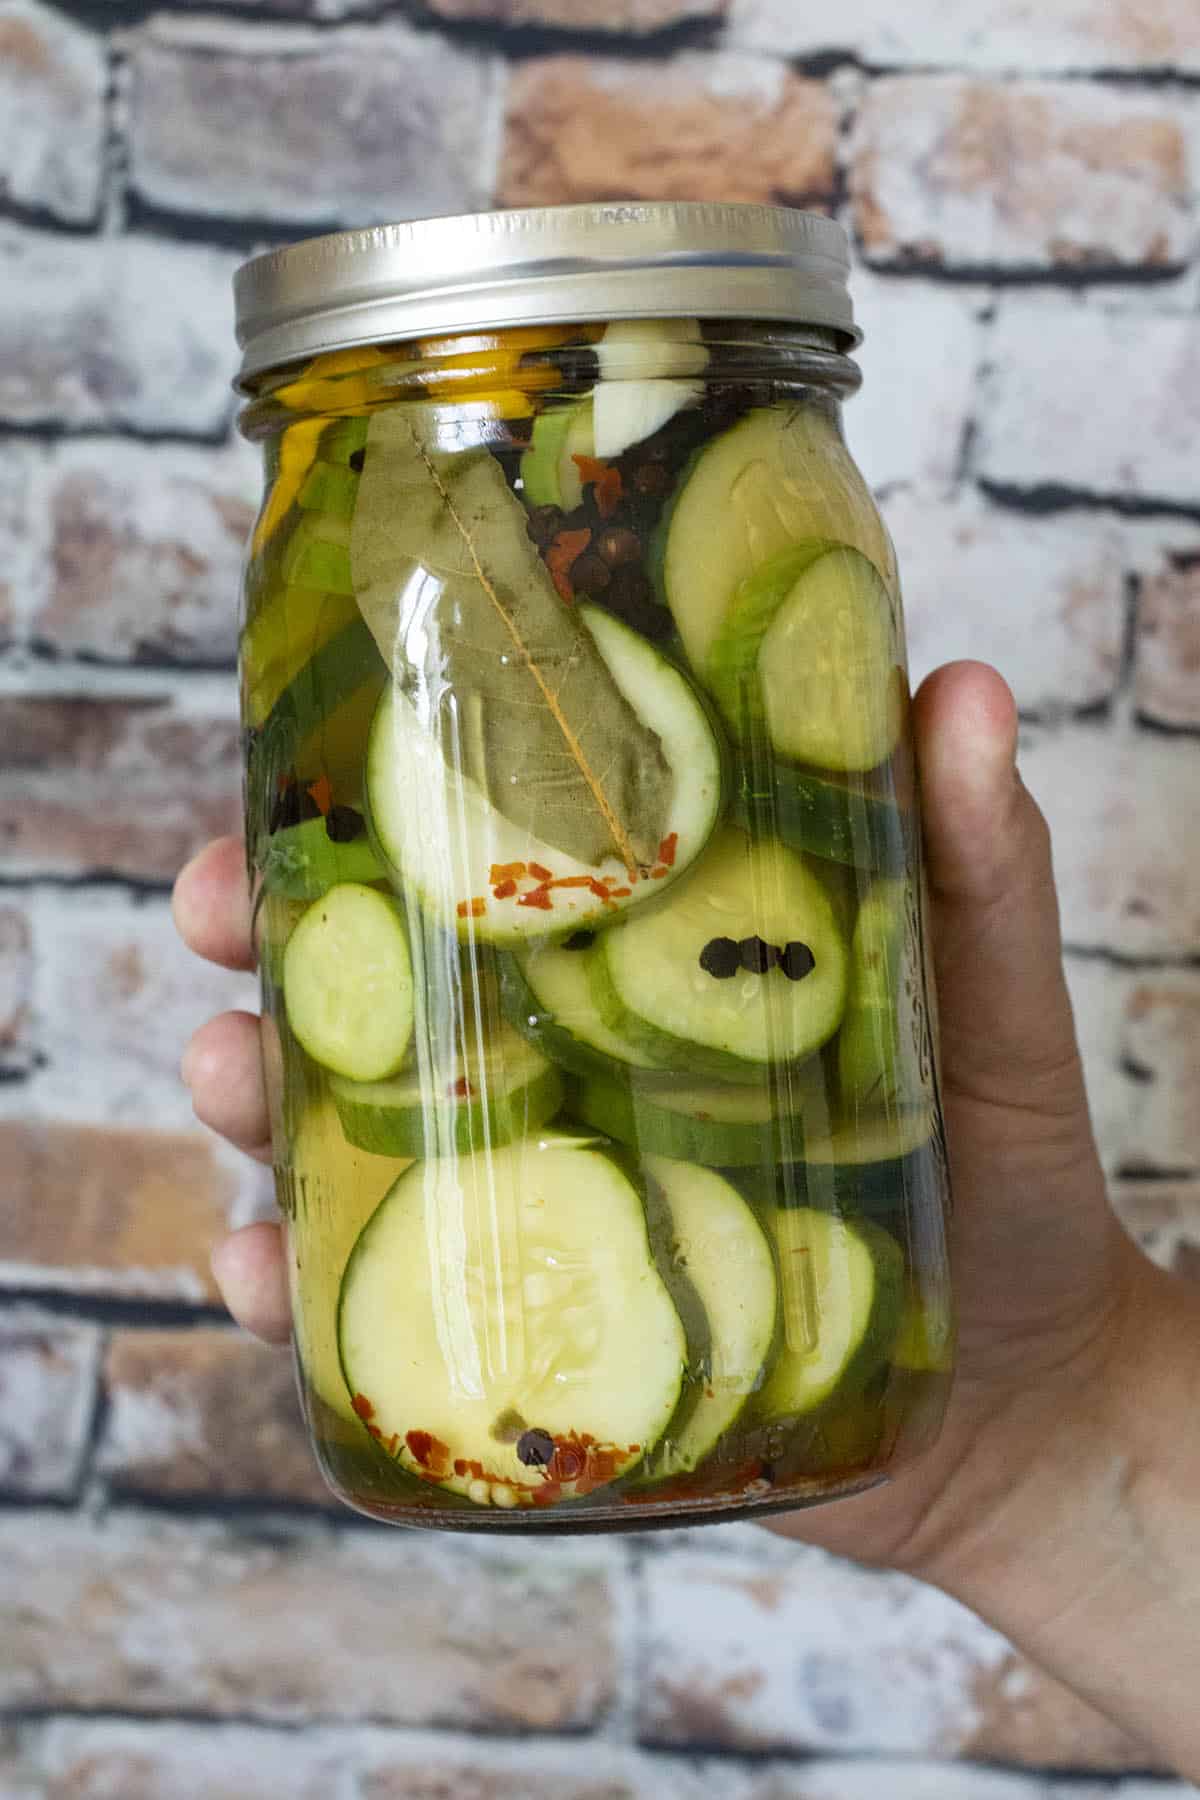 Refrigerator pickles in the jar